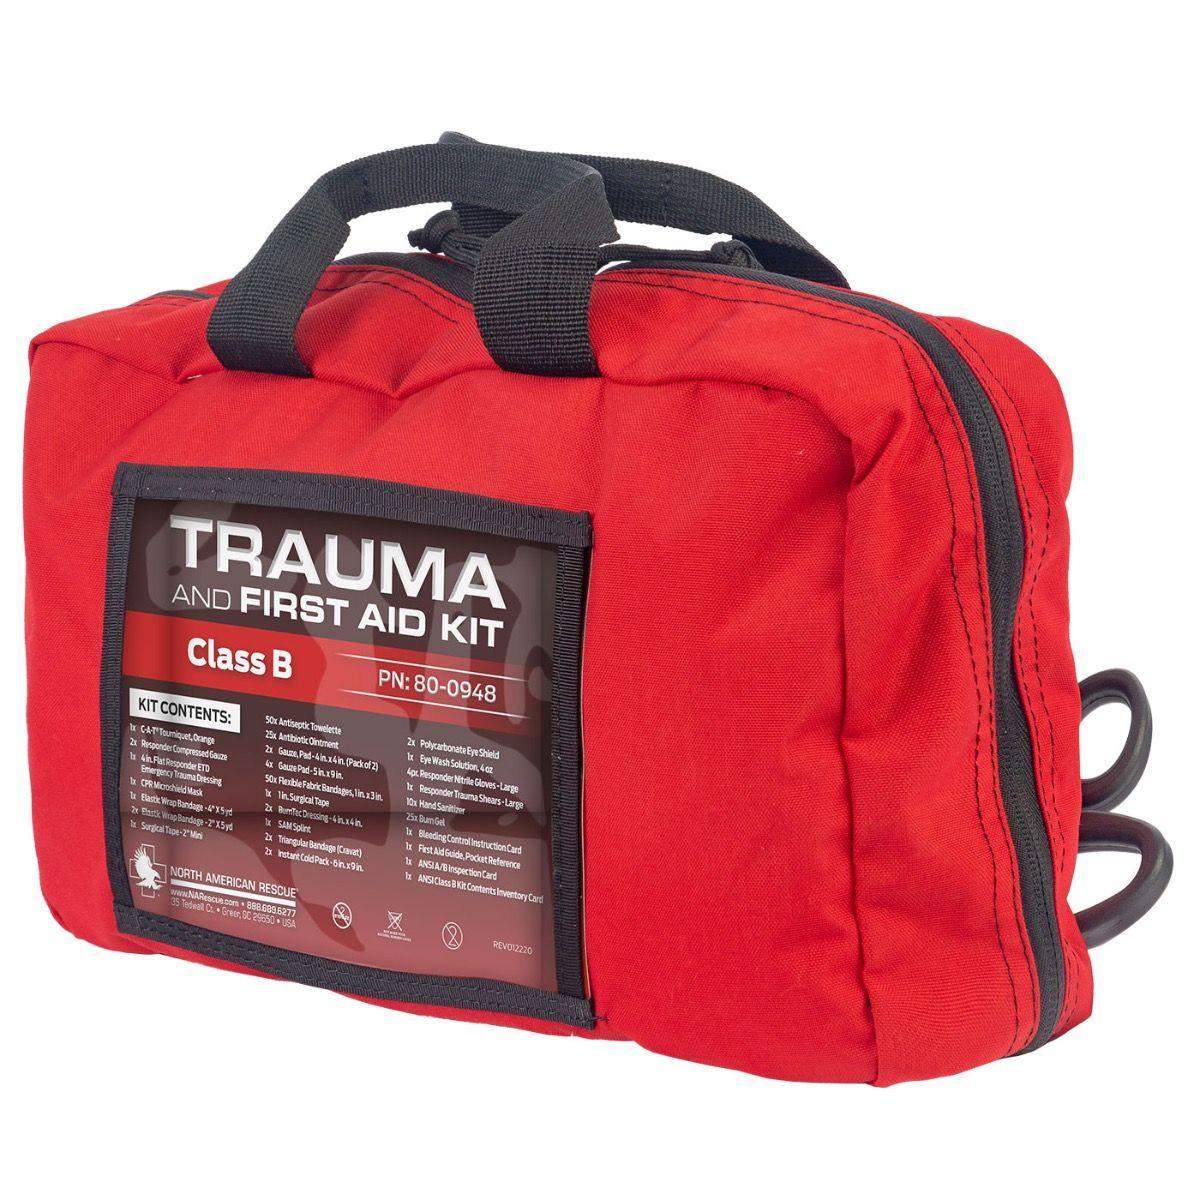 TRAUMA AND FIRST AID KITS - CLASS B - Techline Trauma